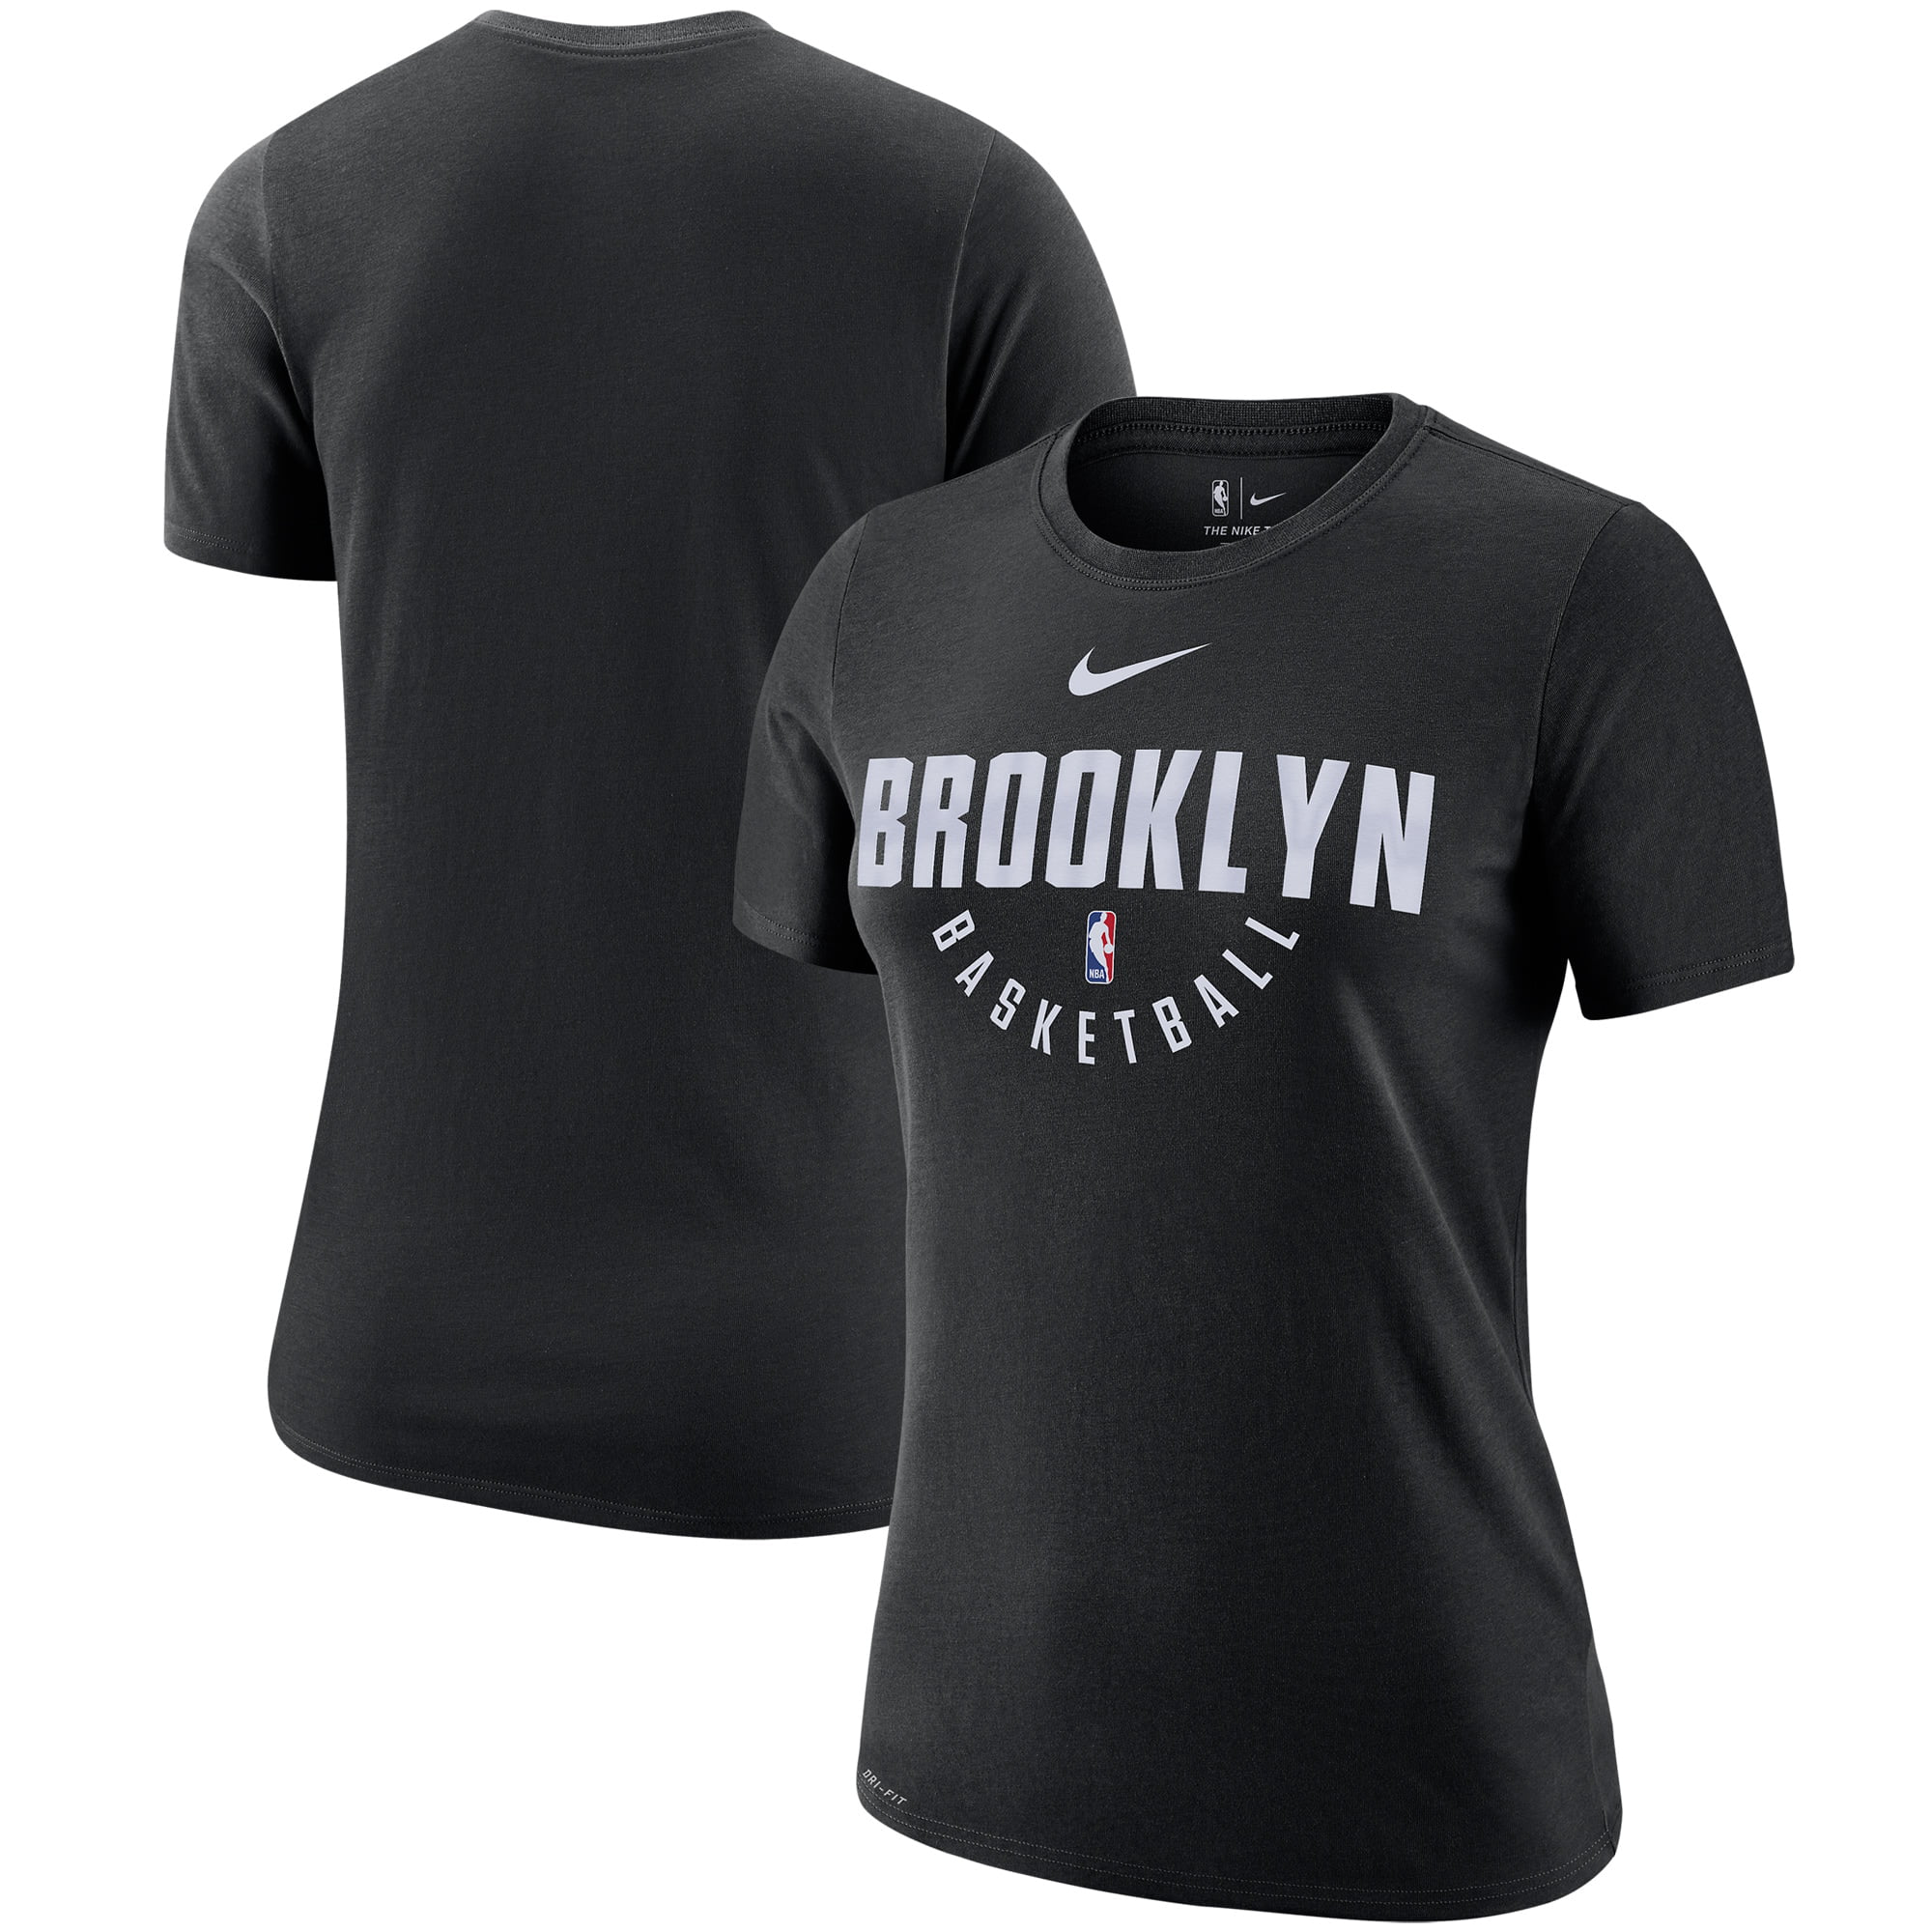 BROOKLYN NETS basketball performance t-shirt black 